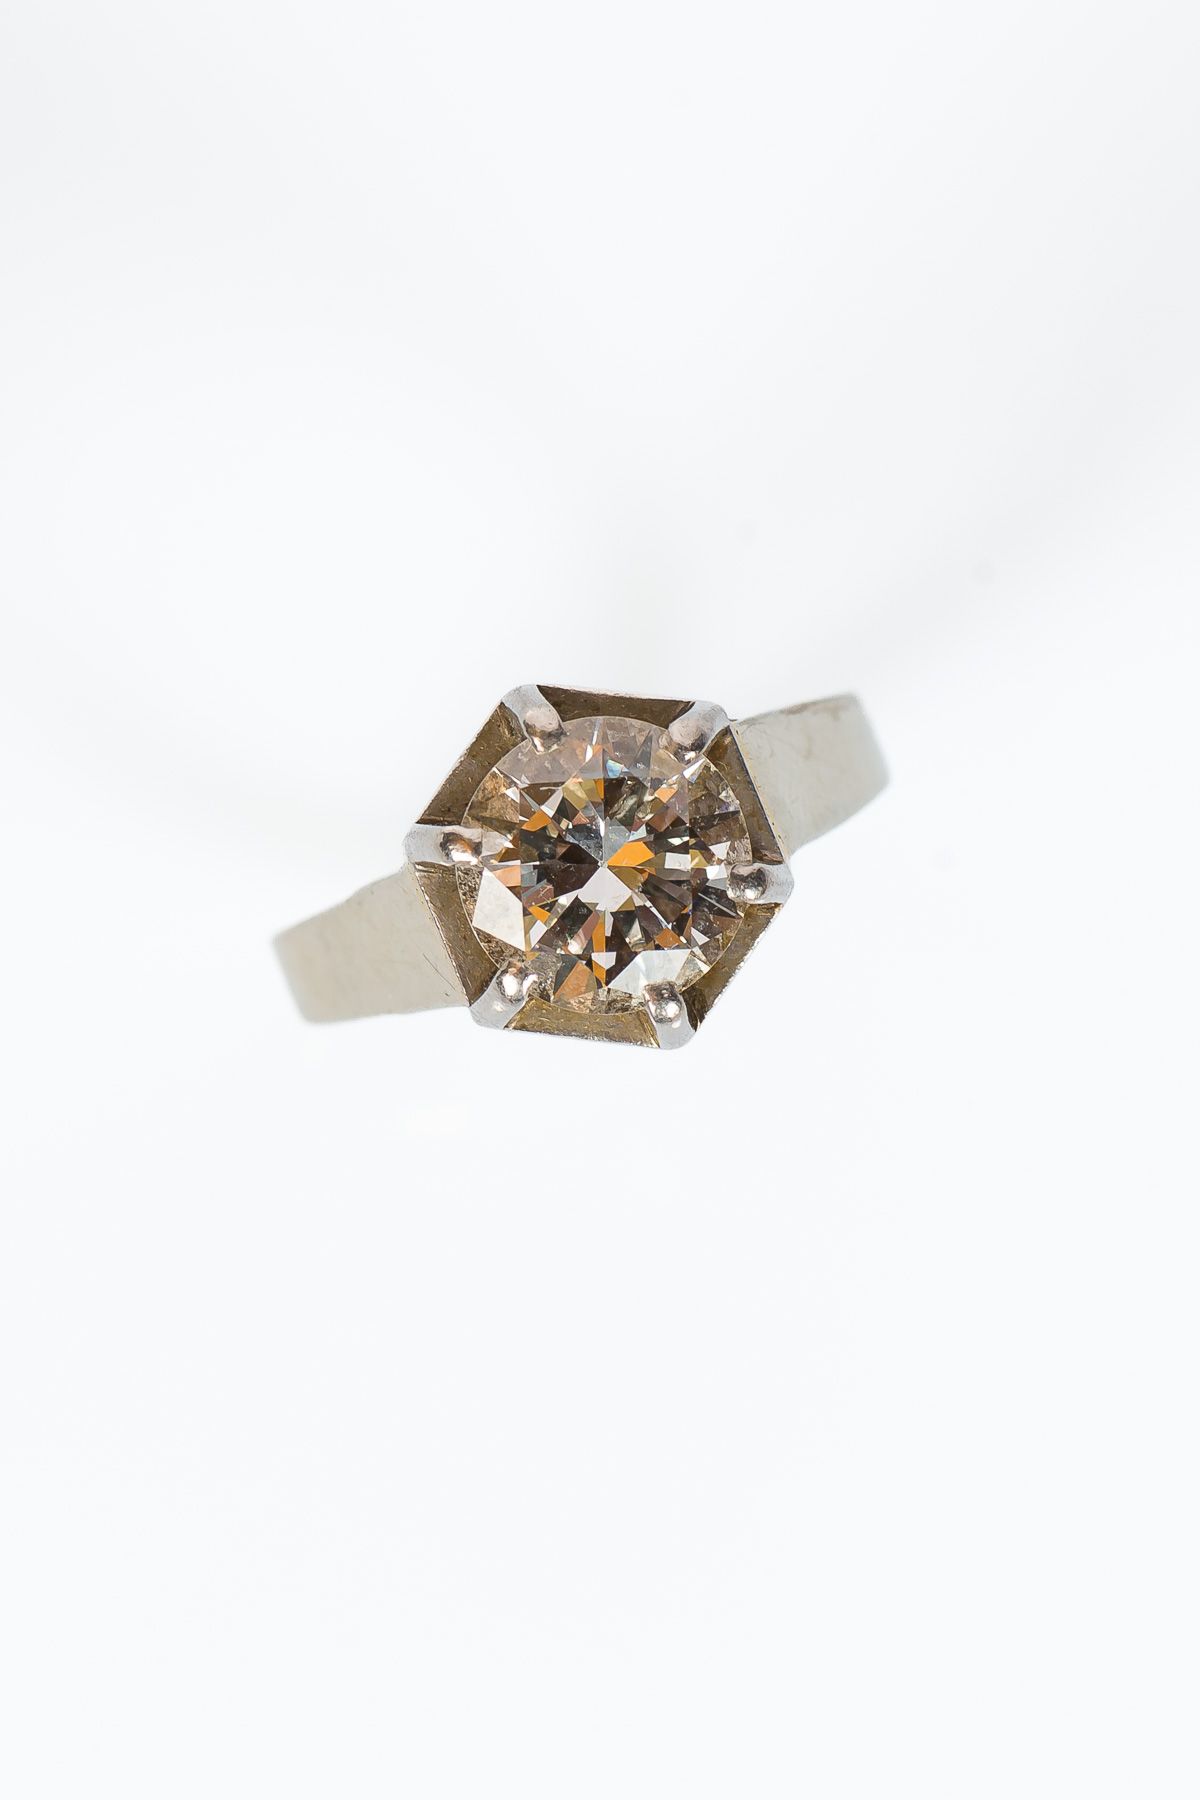 Null 
白金和铂金戒指，镶嵌了一颗约2克拉的半切钻石 20




毛重 : 5,37 g





荧光剂：无至中等




钻石尺寸：8.45 x 8.&hellip;